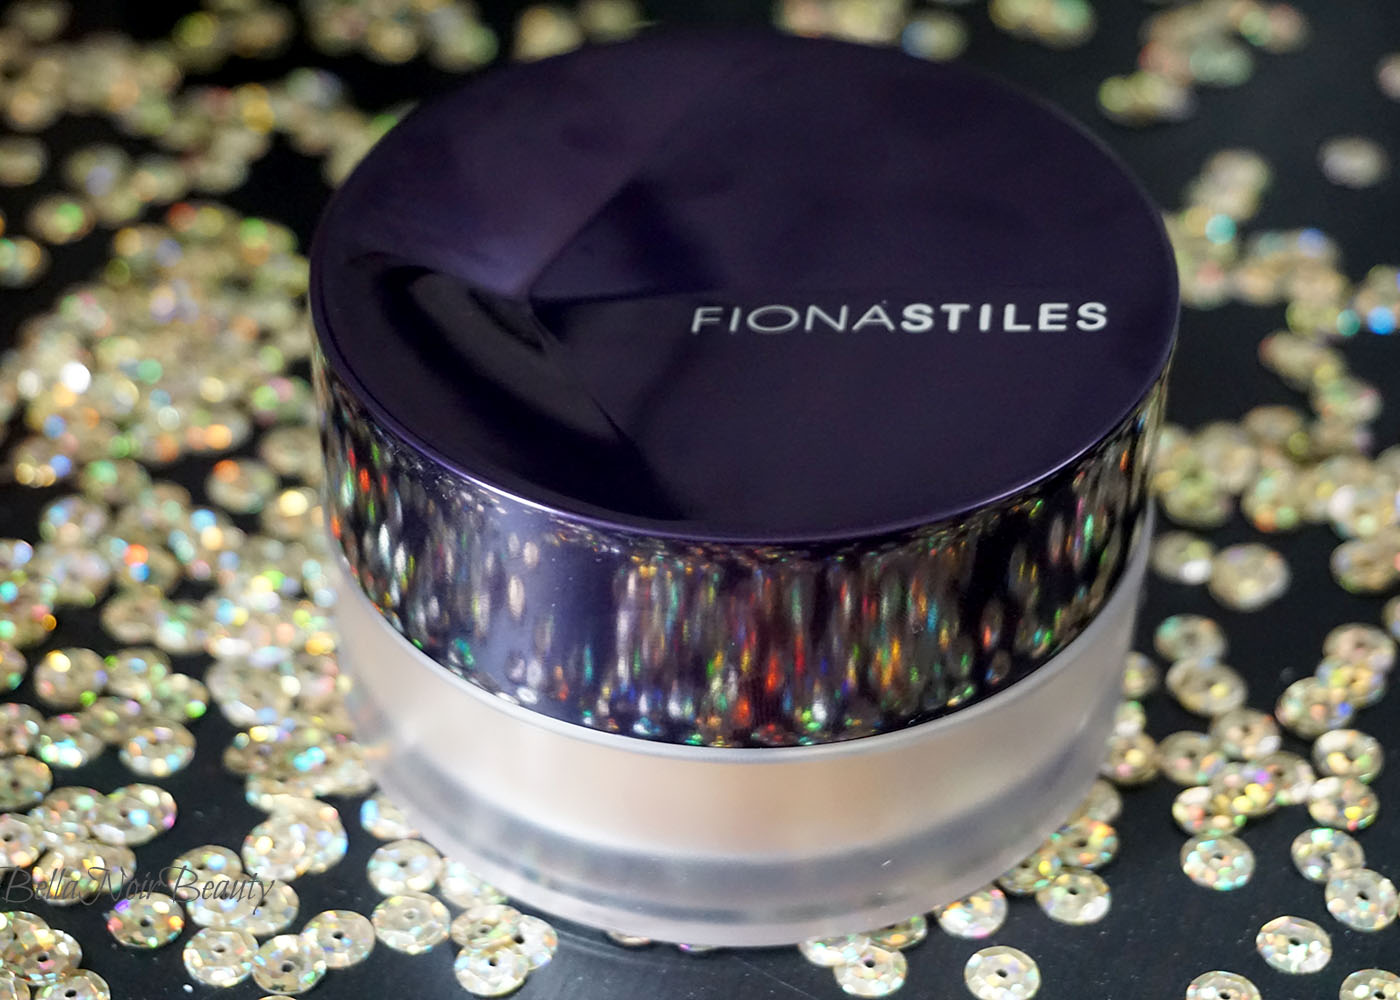  Fiona Stiles Invisible Finish Loose Setting Powder | bellanoirbeauty.com